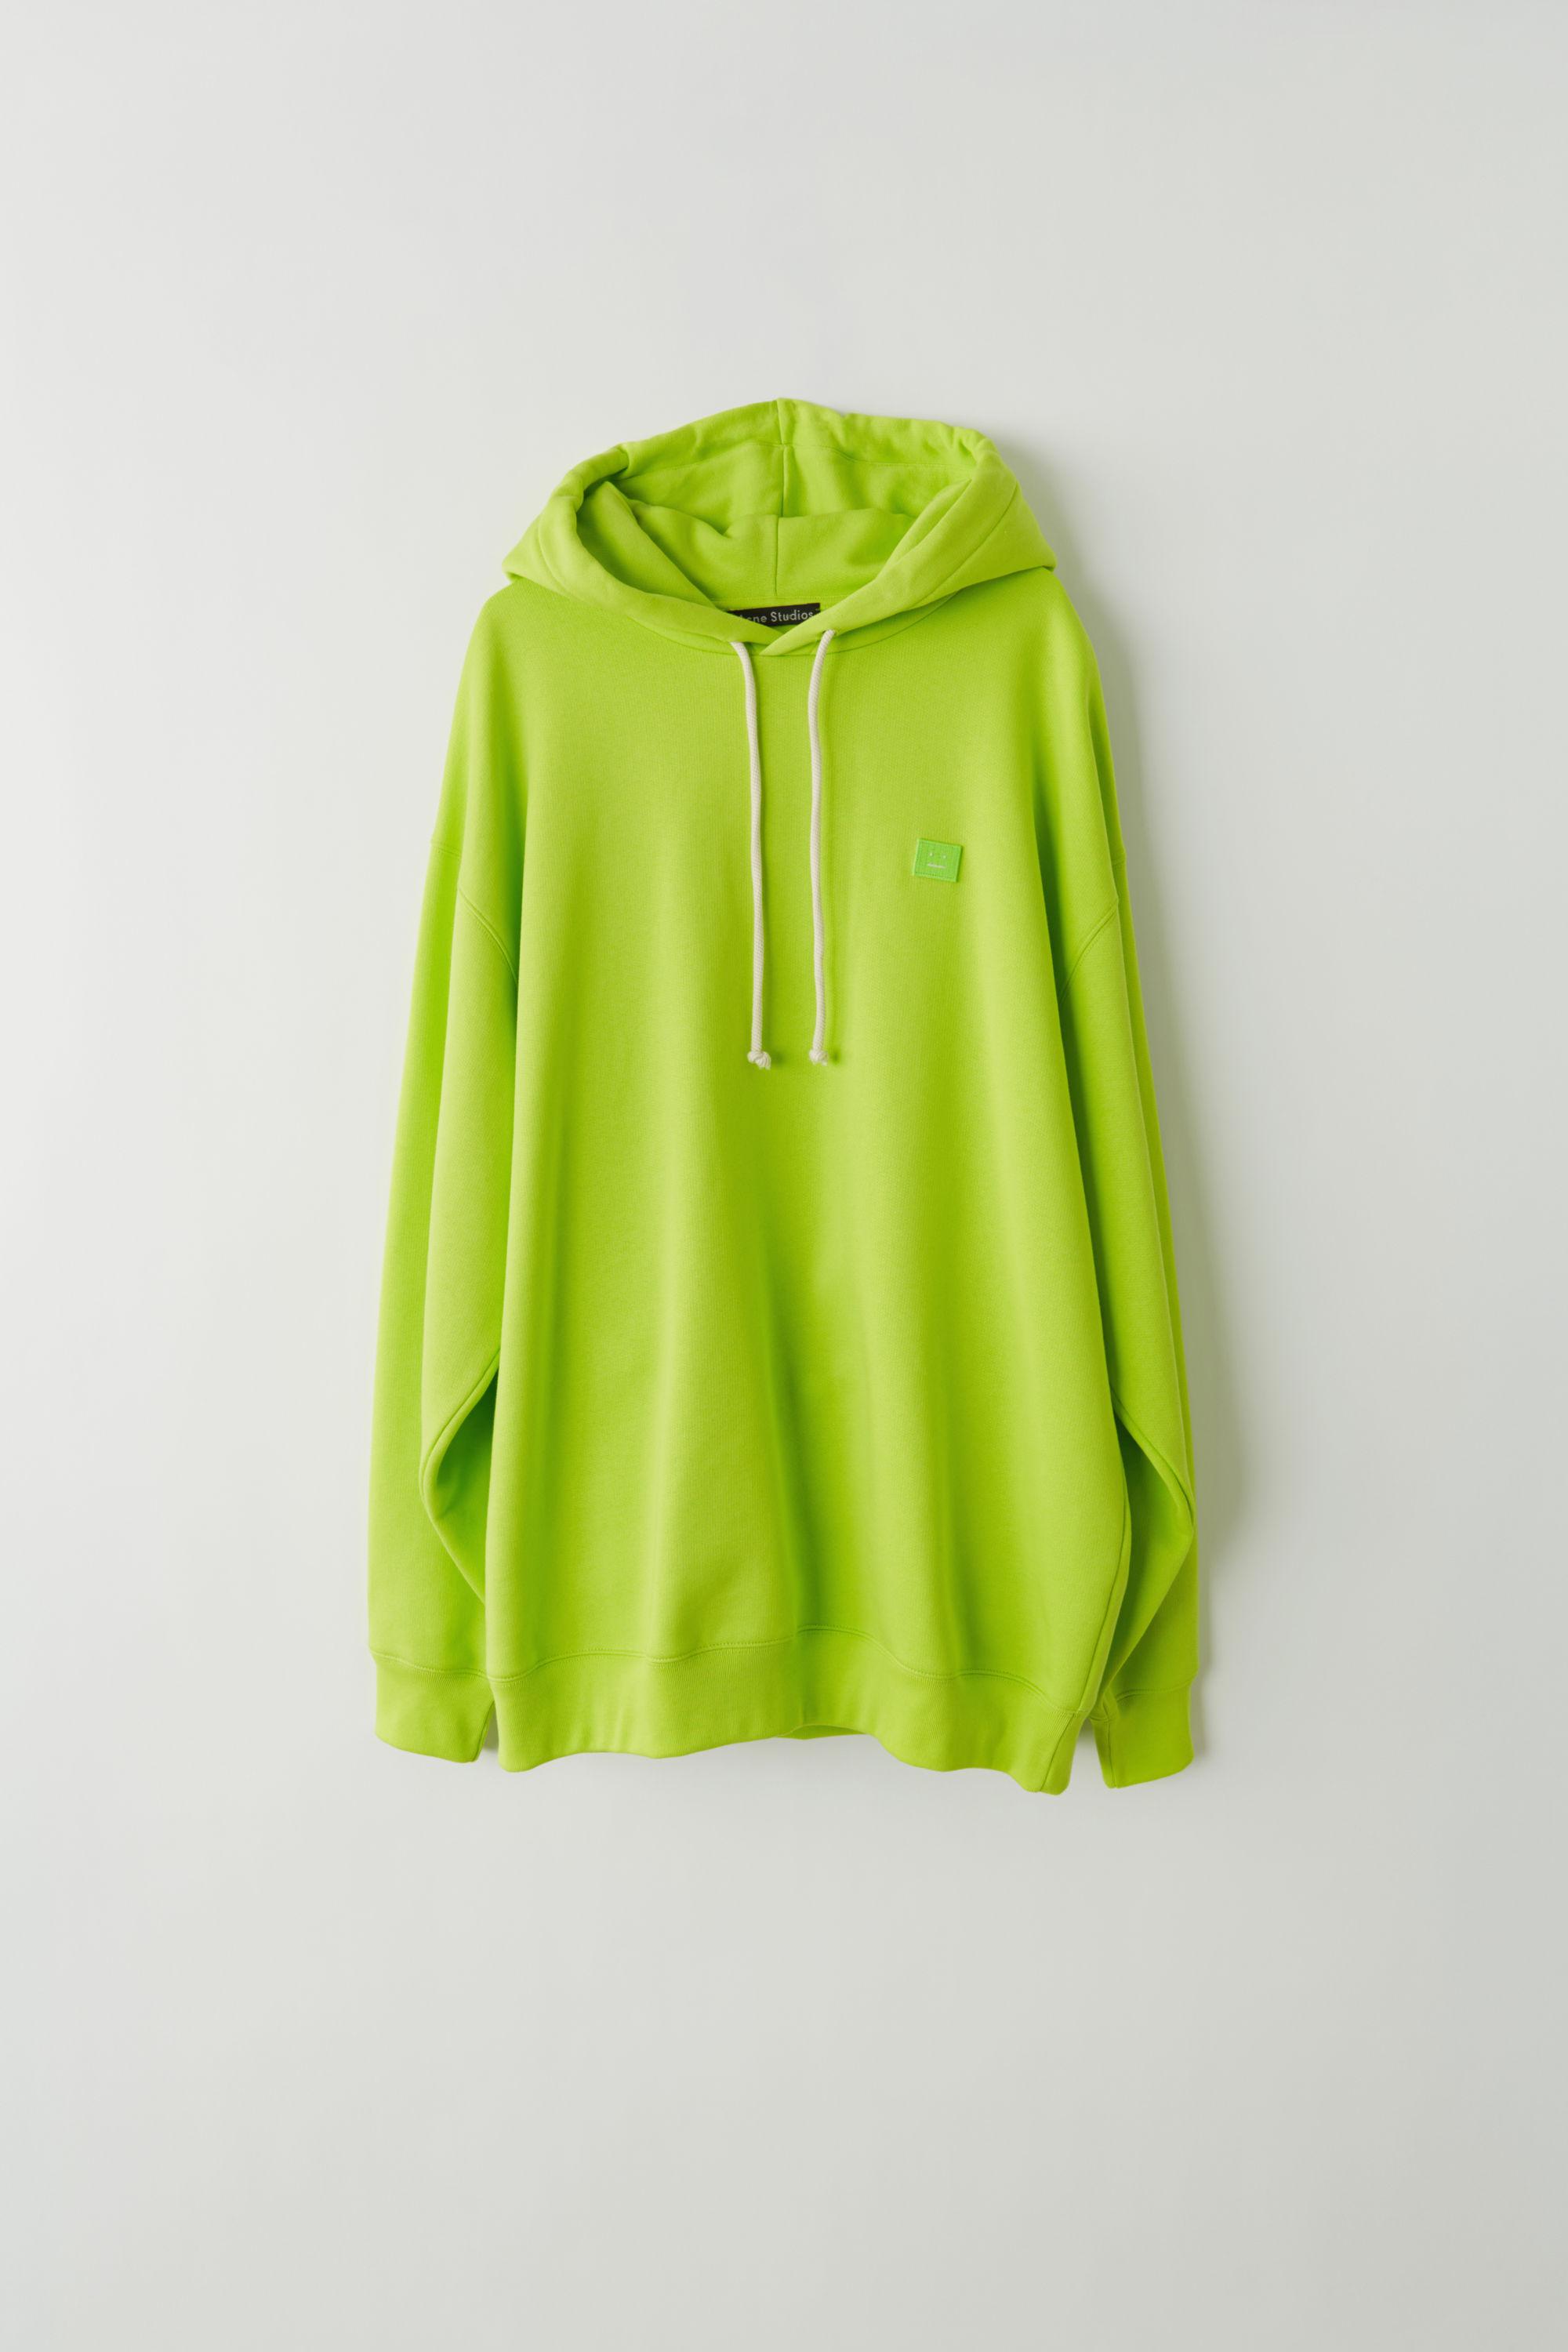 lime green hoodie dress